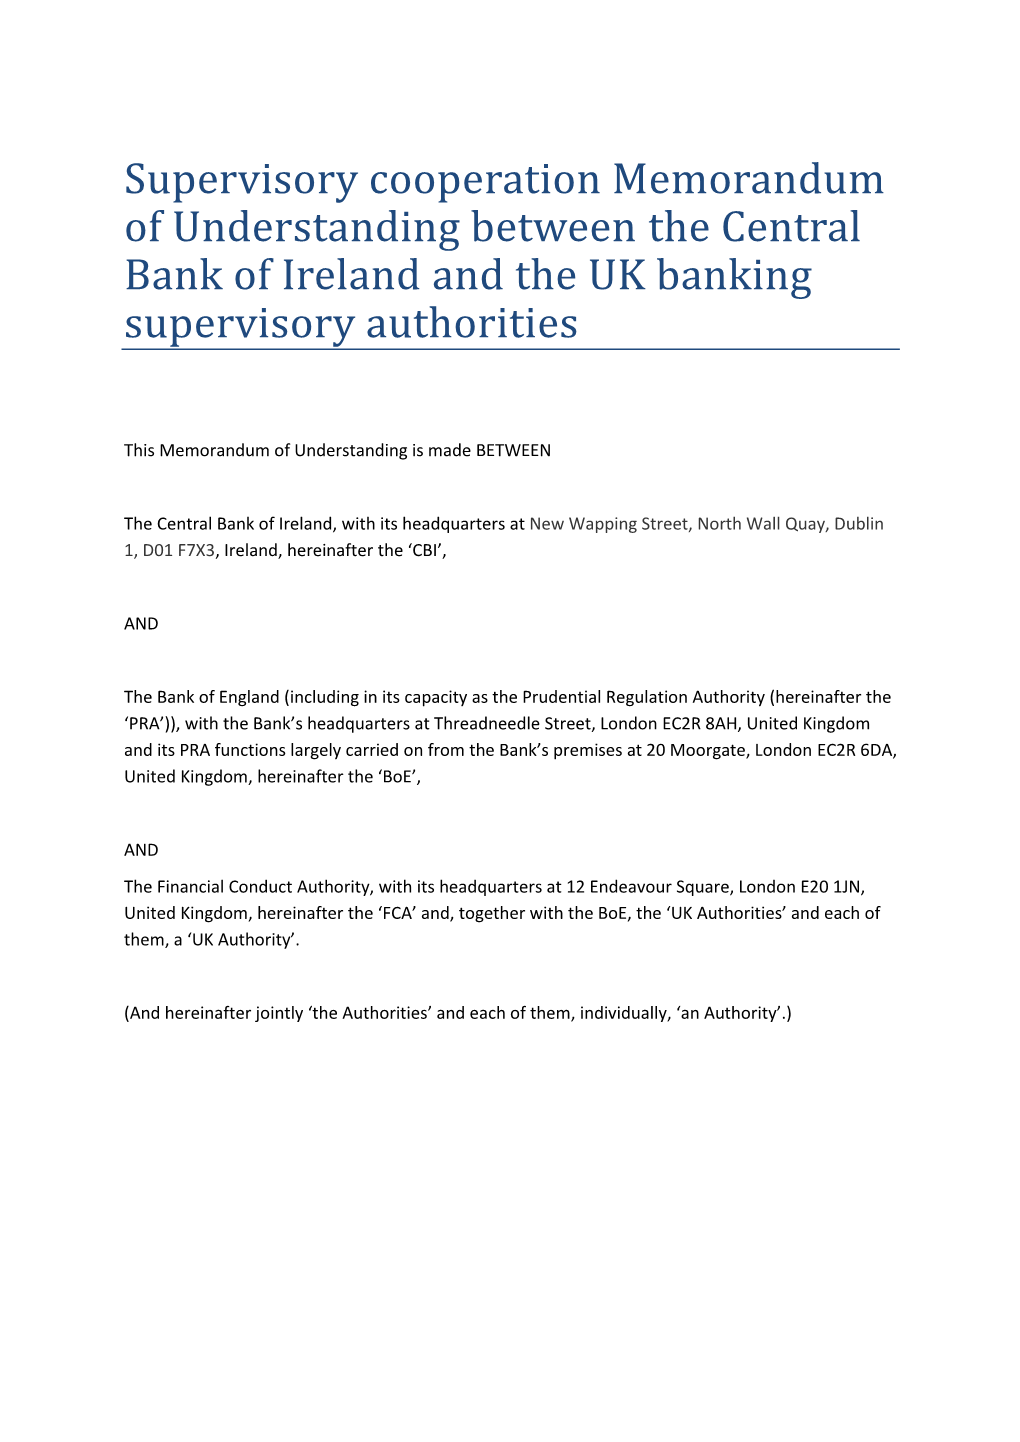 Supervisory Cooperation Memorandum of Understanding Between the Central Bank of Ireland and the UK Banking Supervisory Authorities